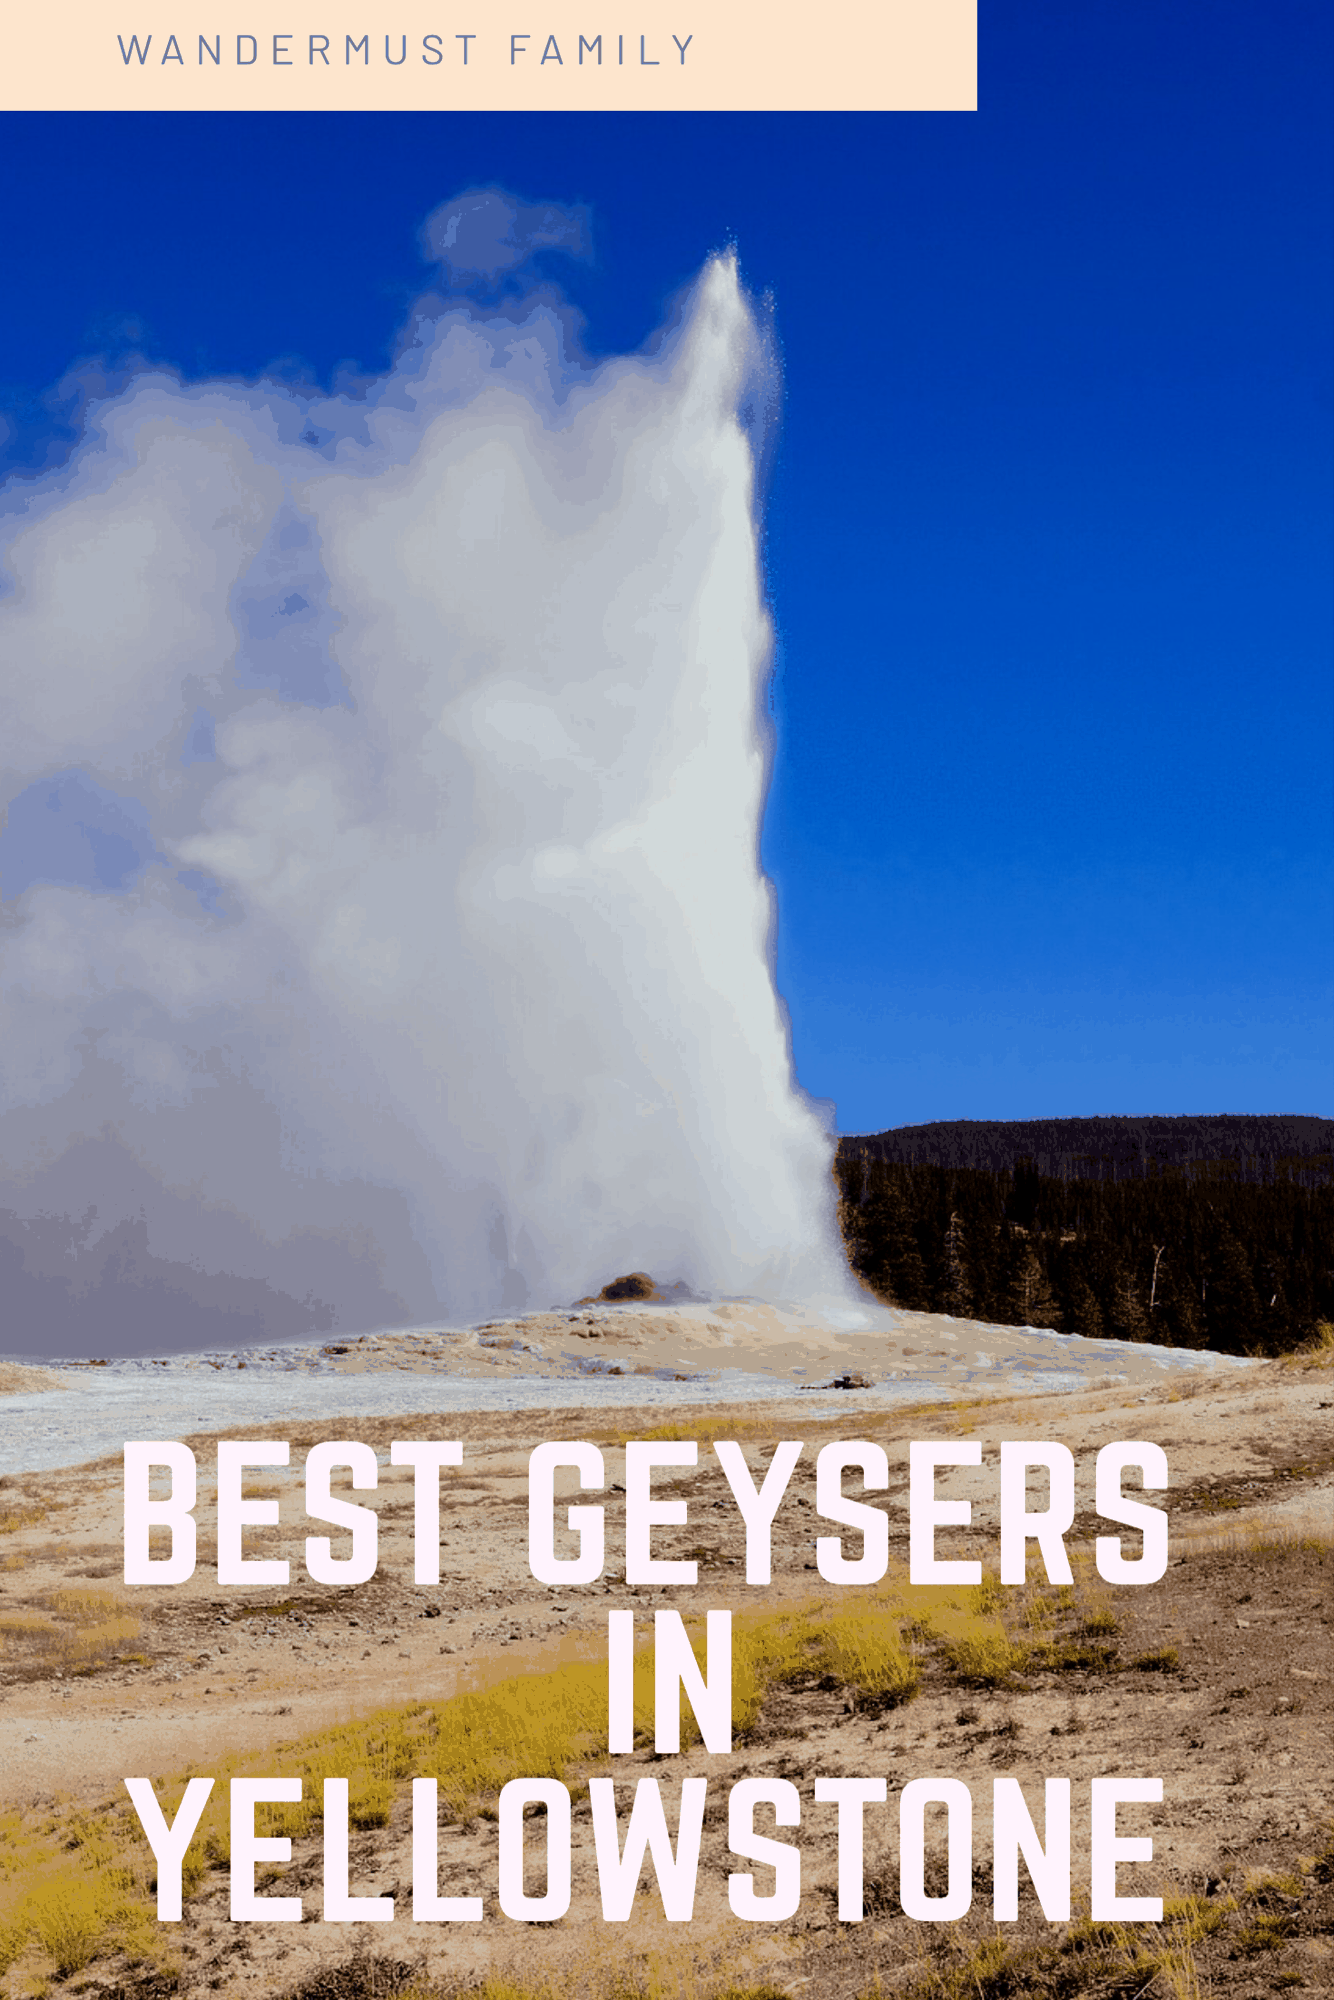 Best Geysers in Yellowstone. The Best Yellowstone Geysers - a list of the ultimate Yellowstone attractions - geyser edition including Old Faithful! #yellowstone #yellowstonenp #yellowstonenationalpark #visitingyellowstone #oldfaithful #yellowstonegeysers #geysers 